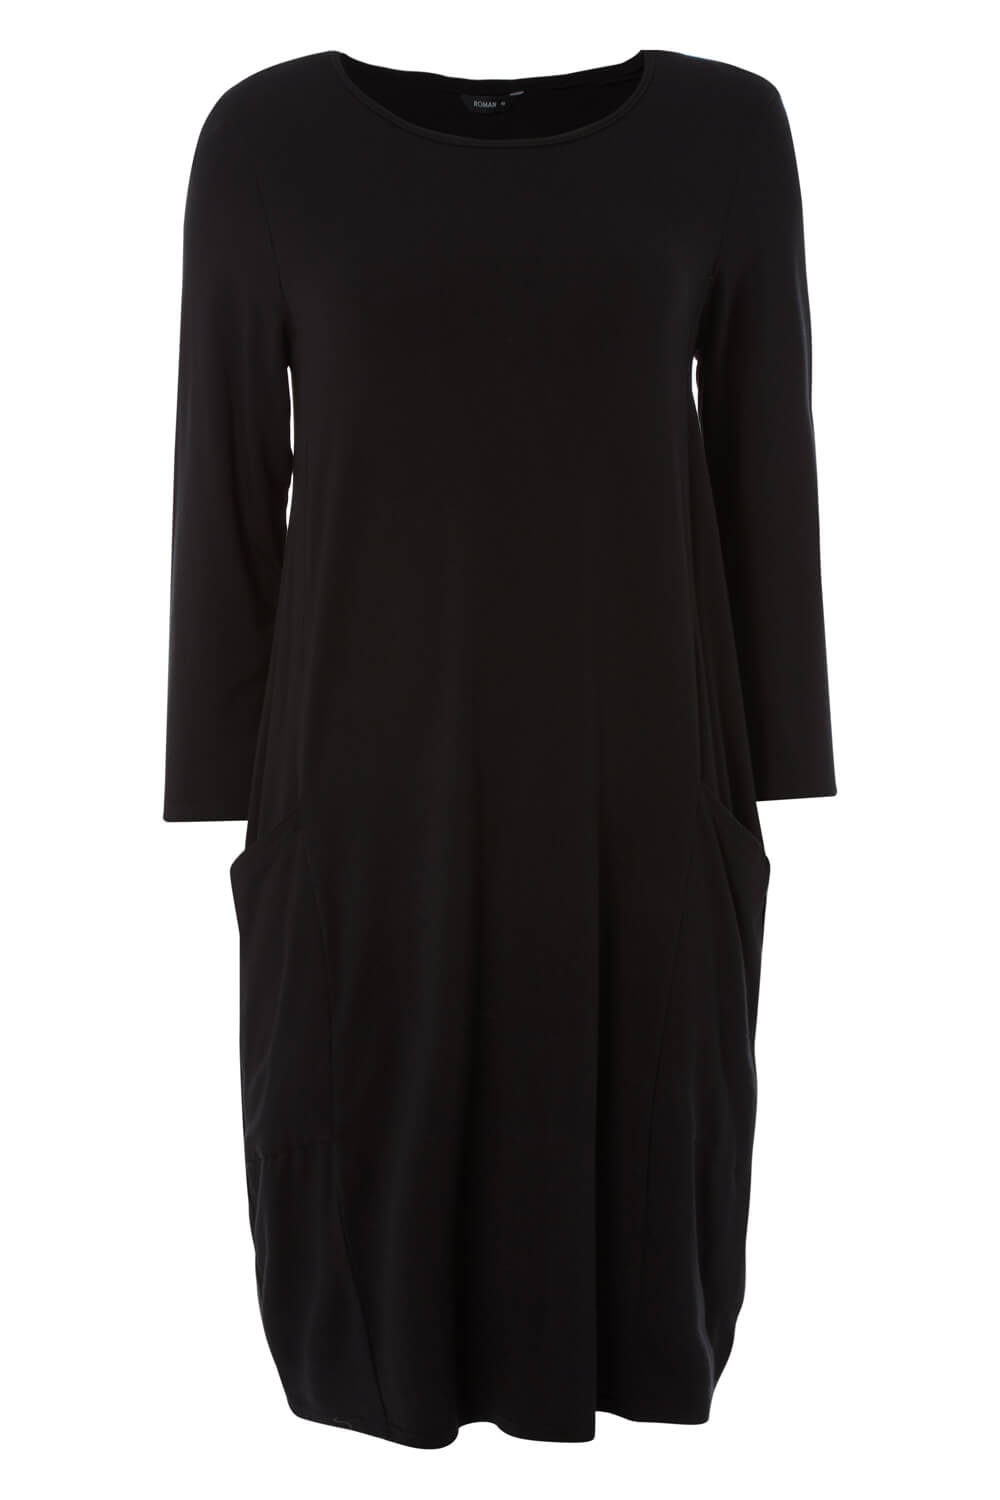 3/4 Sleeve Slouch Dress in Black - Roman Originals UK